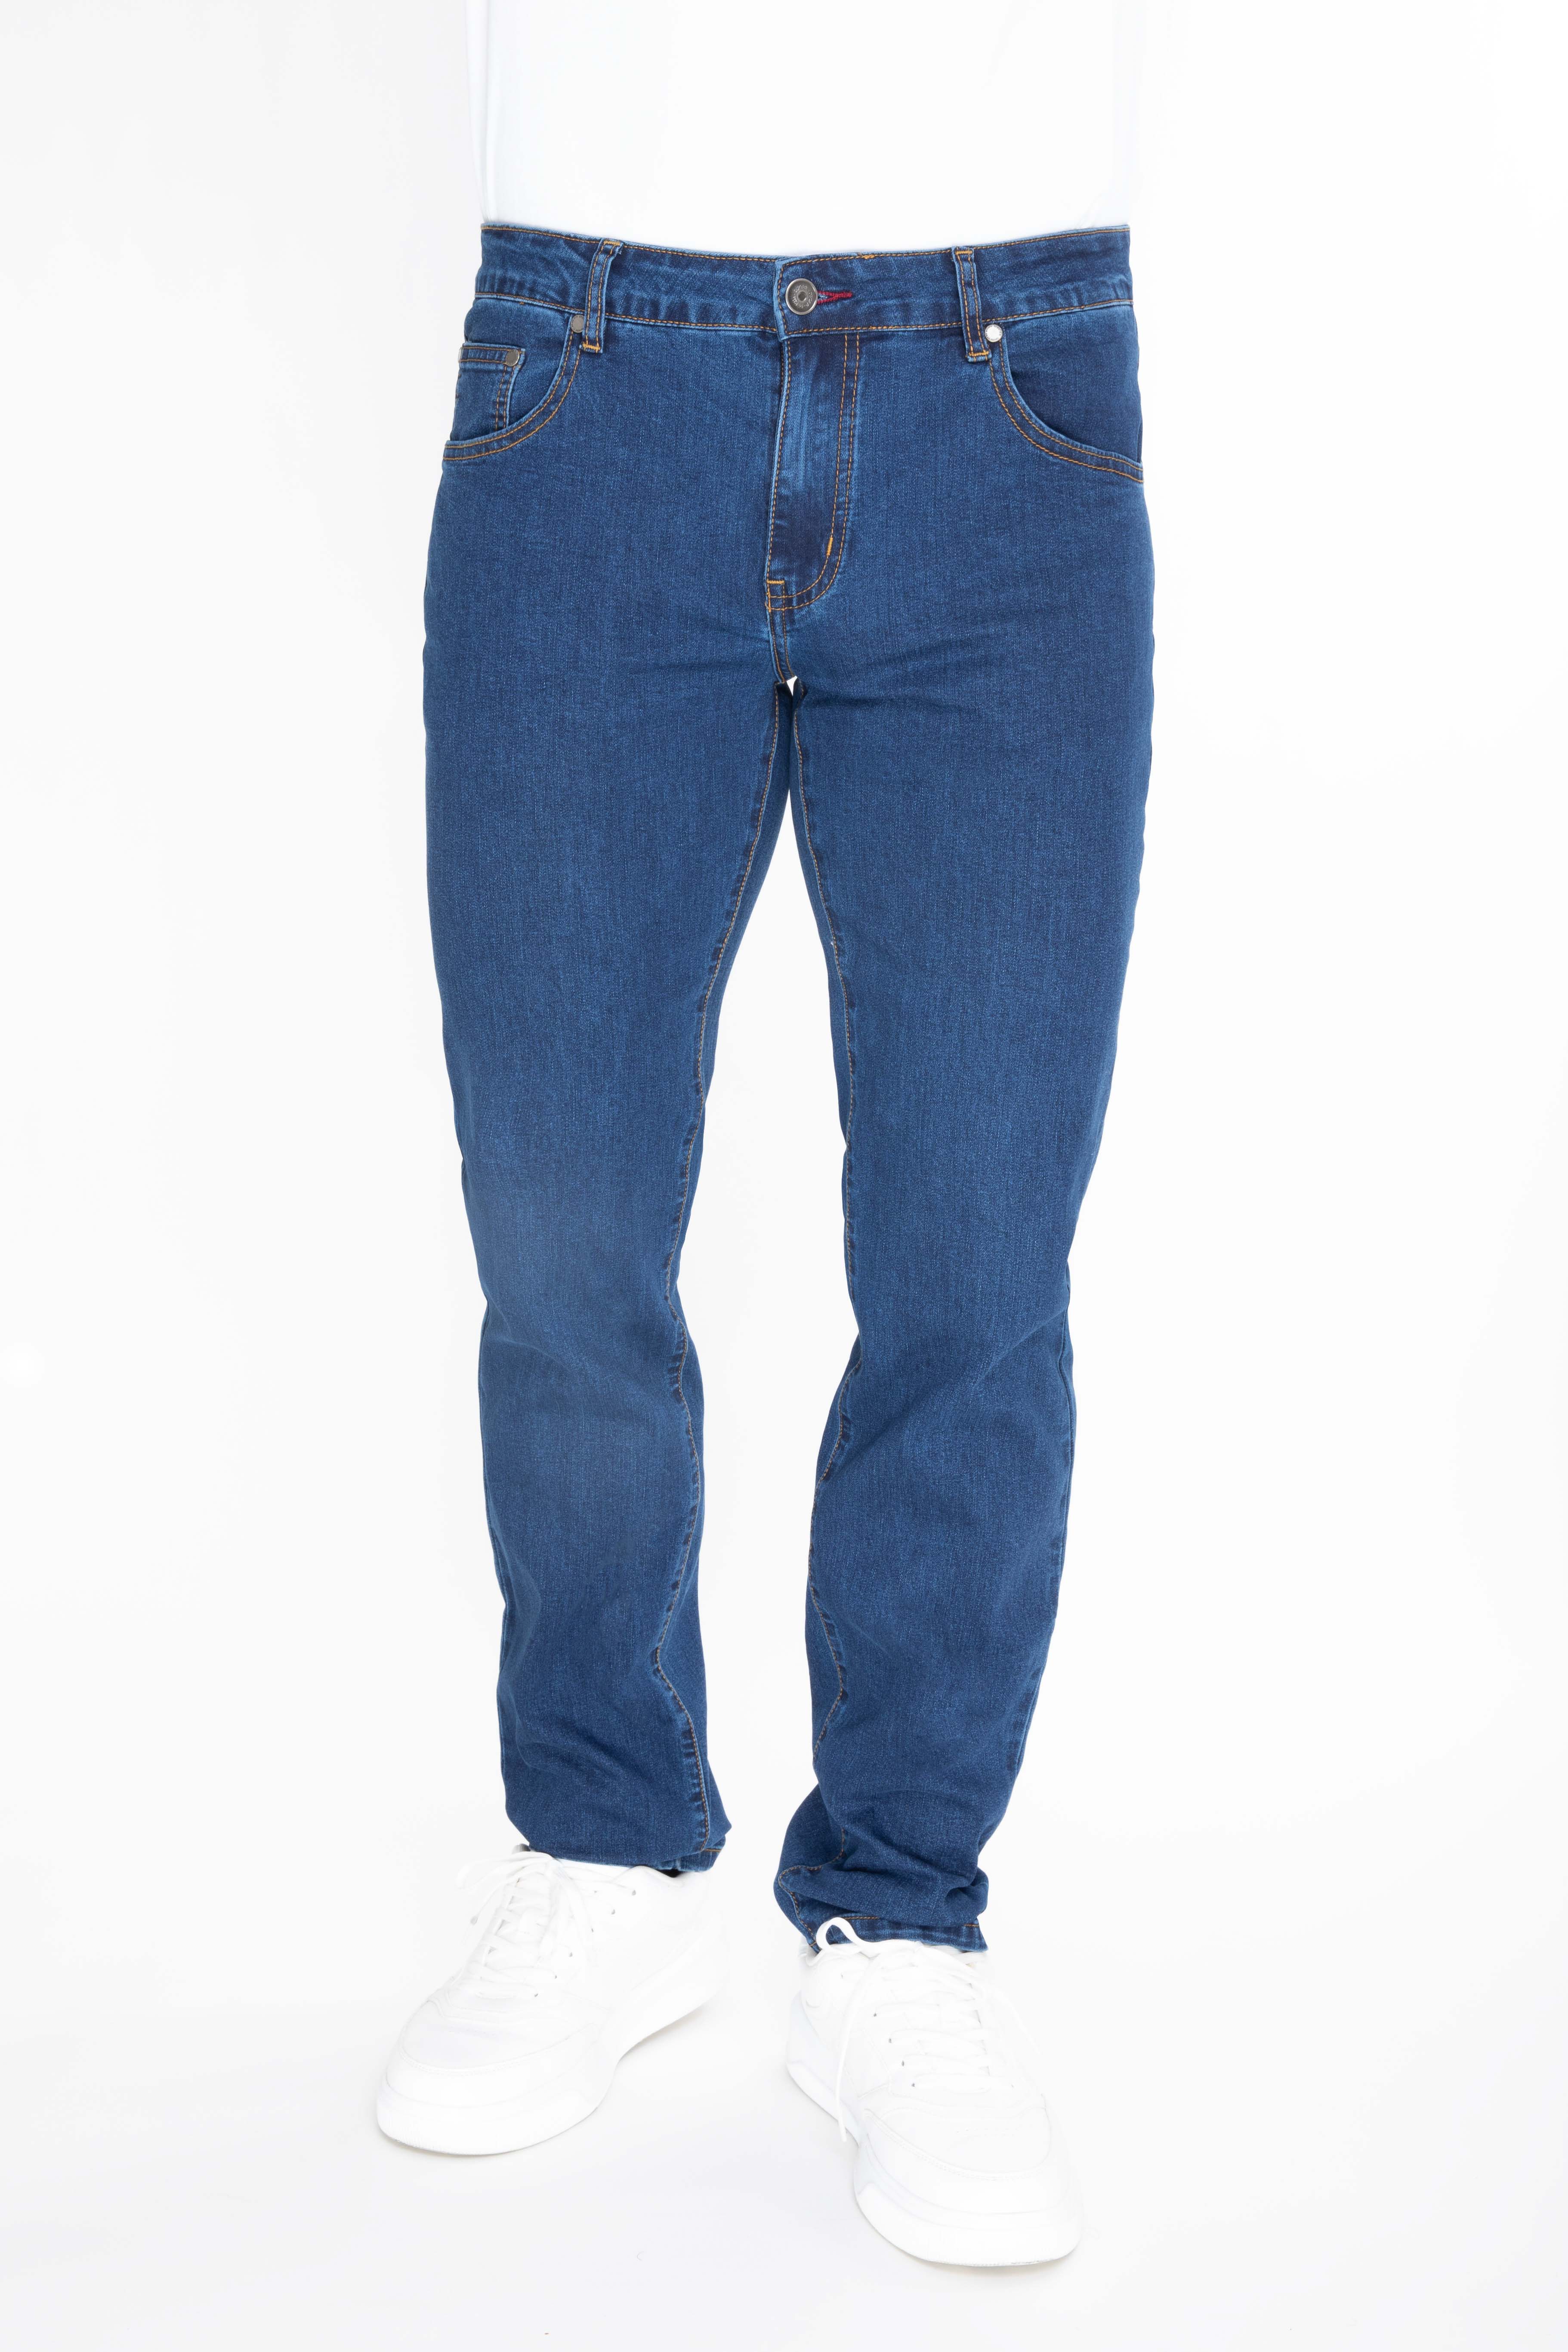 CABALLEROS-pantalon-jeans-oscar-p-caballeros-1